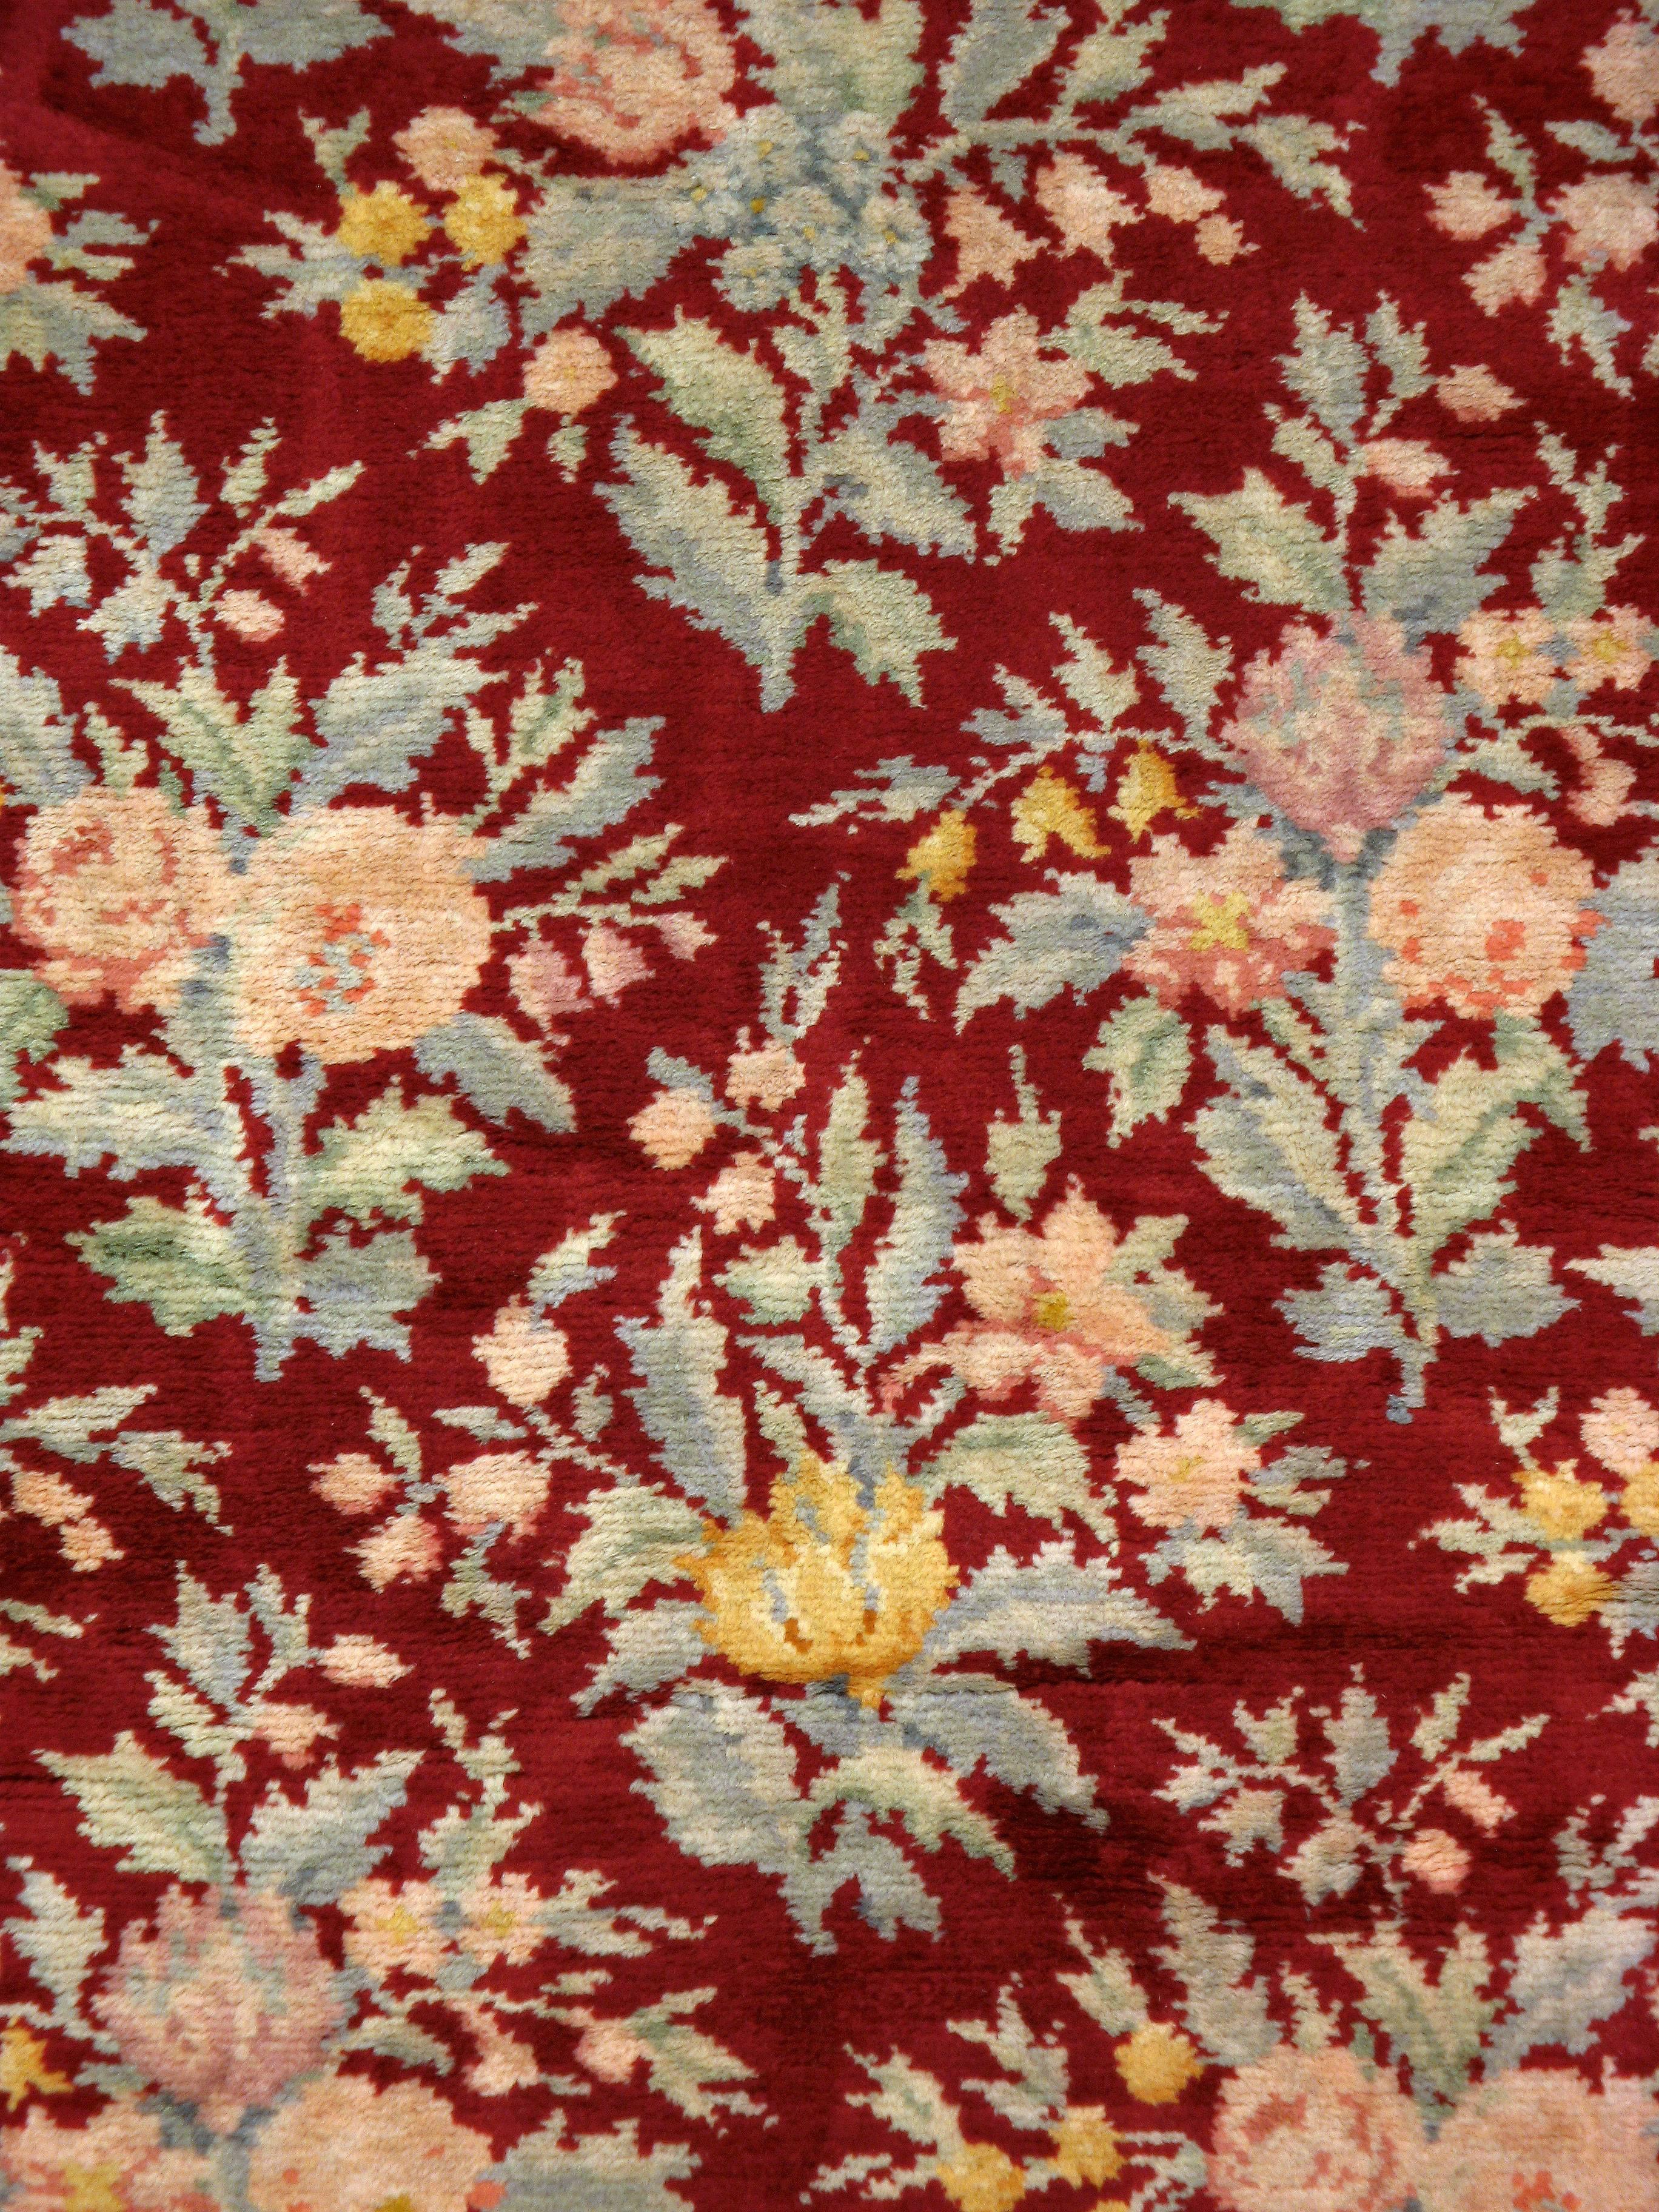 A second quarter 20th century Spanish Savonnerie carpet.